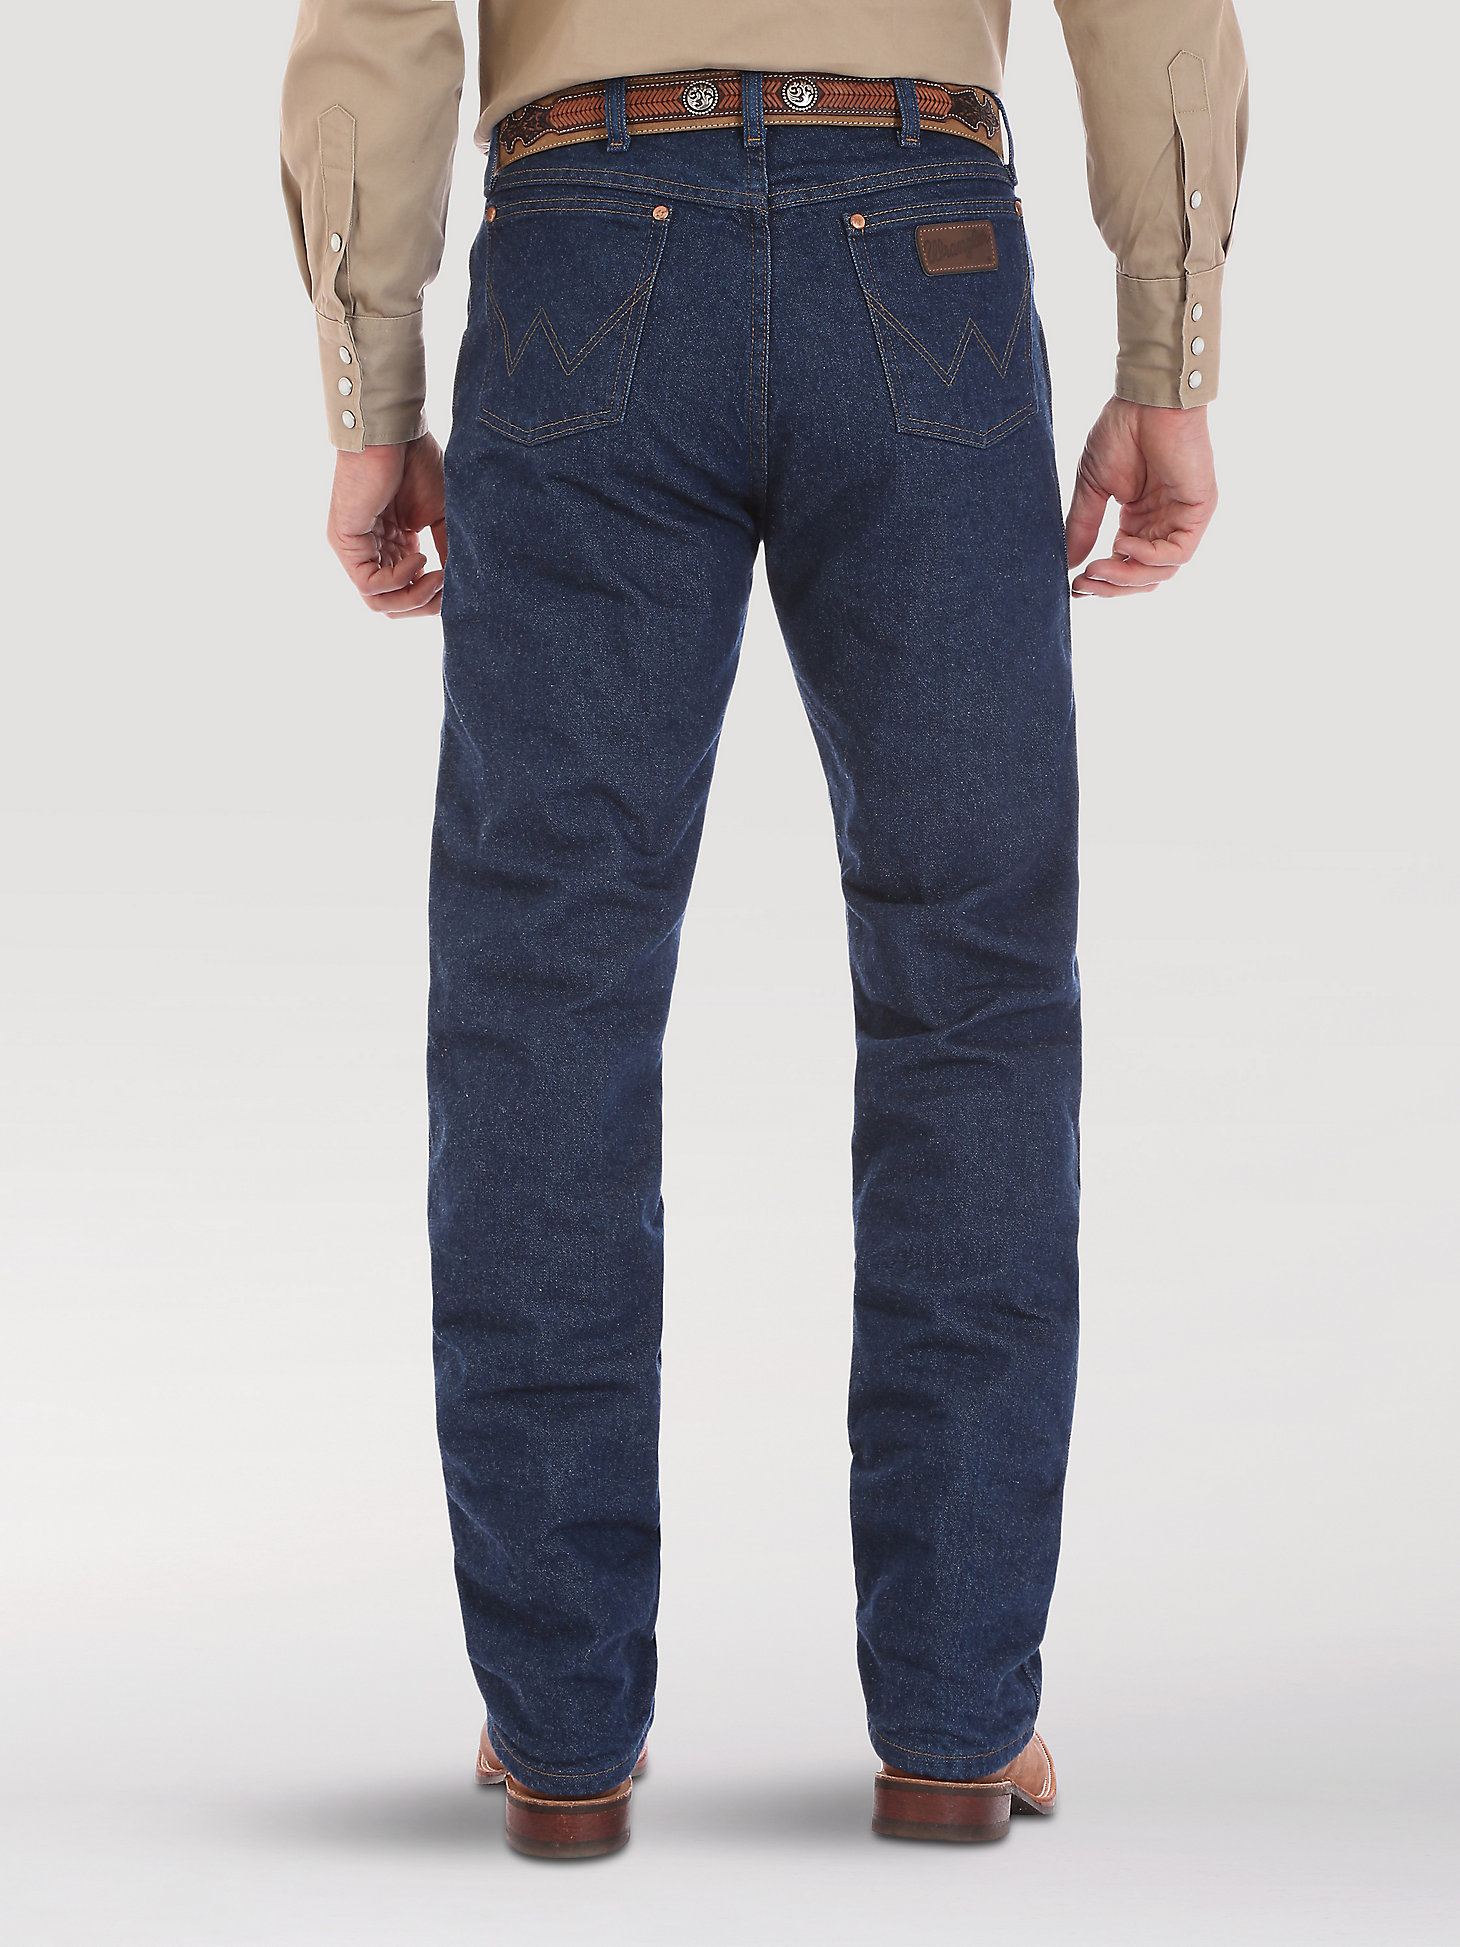 Premium Performance Cowboy Cut® Regular Fit Jean - Flannel Lined in Stonewash alternative view 1